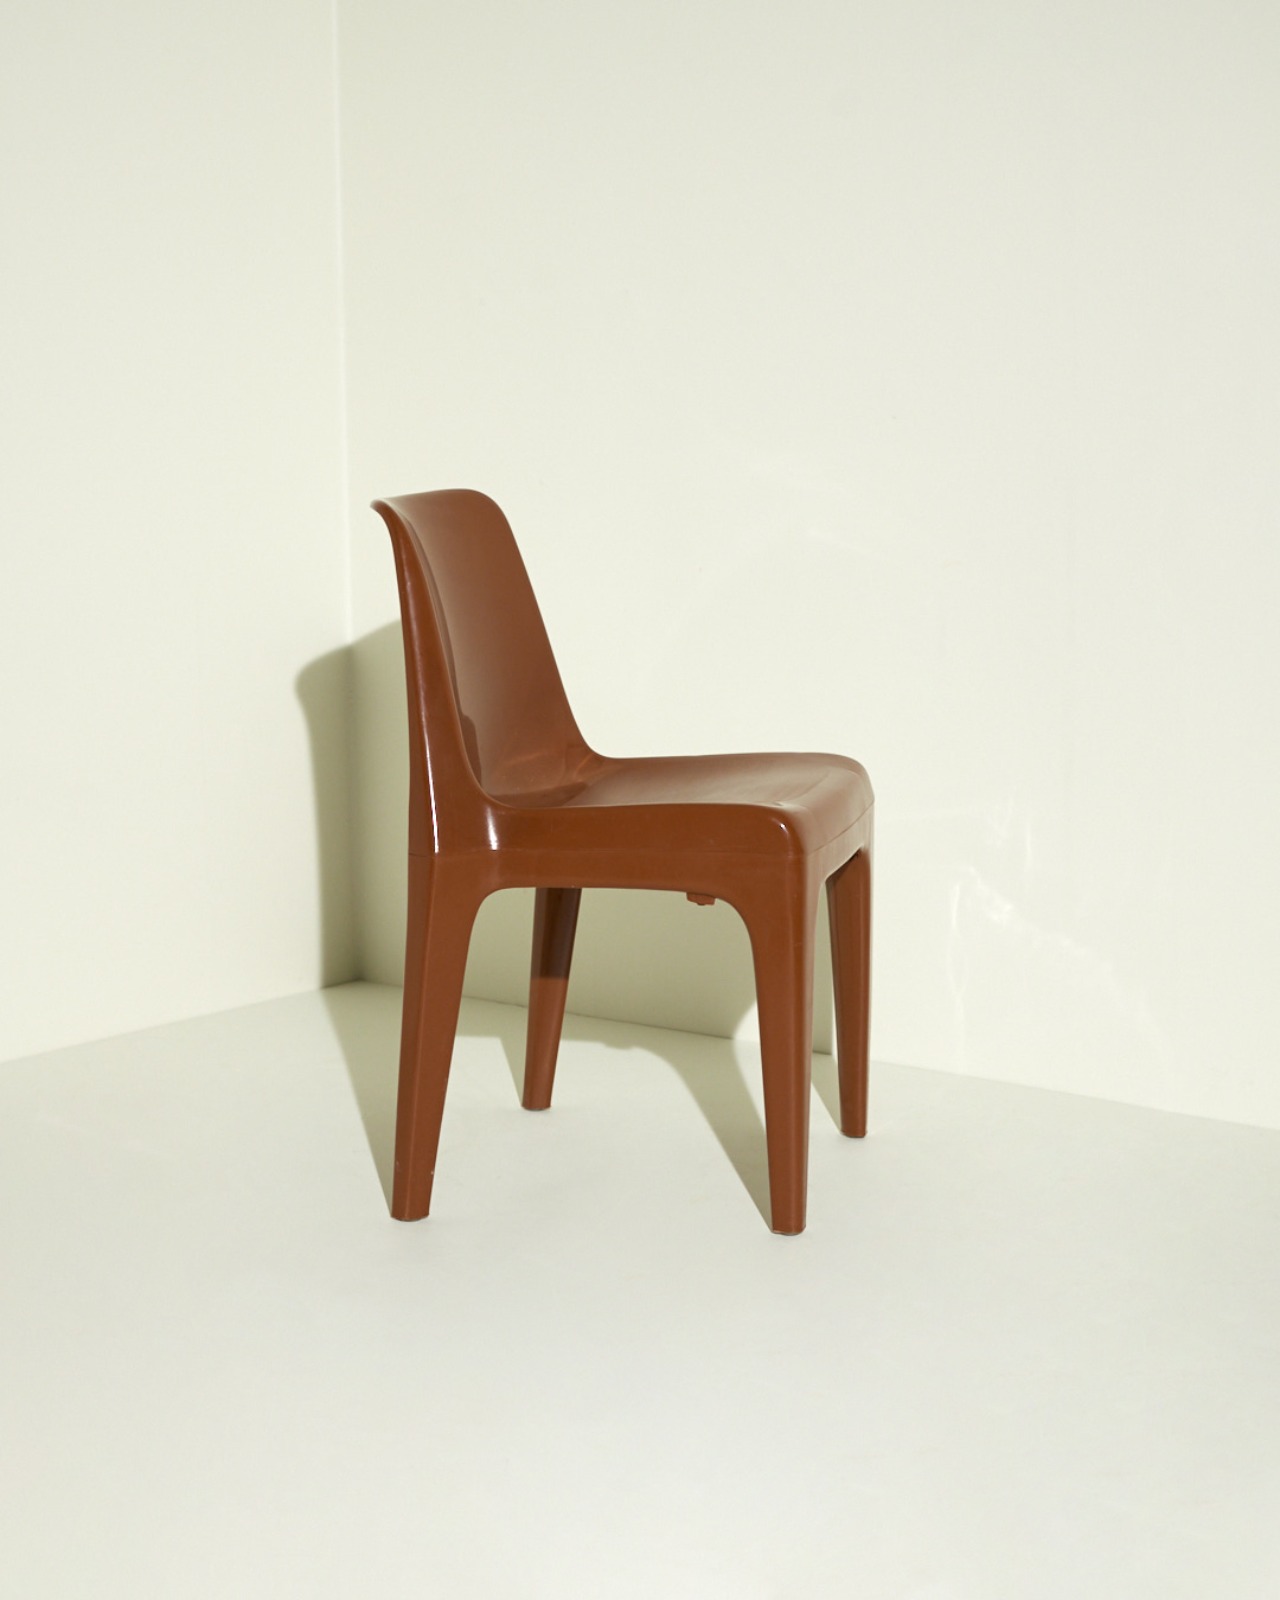 Garden Lounge Chairs by Albert Brokopp for Wesifa 60s (brown)